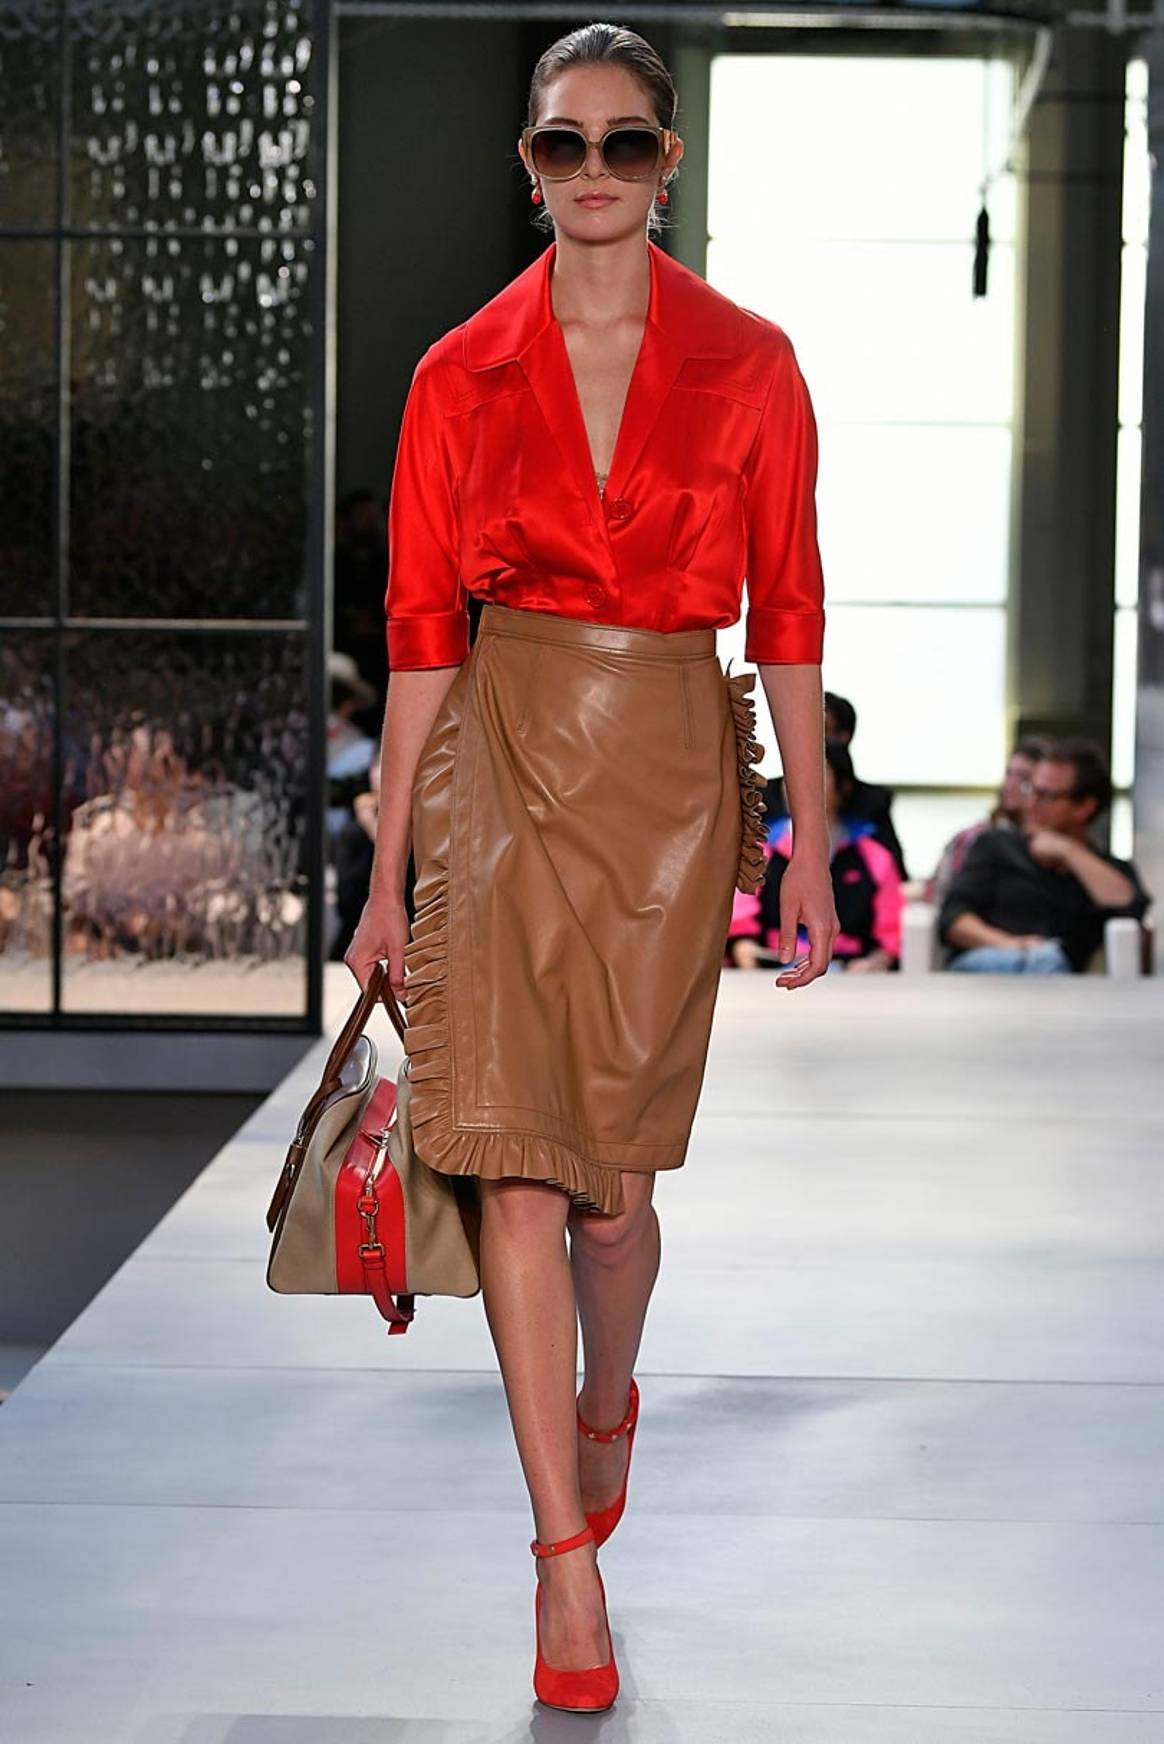 Victoria Beckham and sushi hats: London Fashion Week wraps up